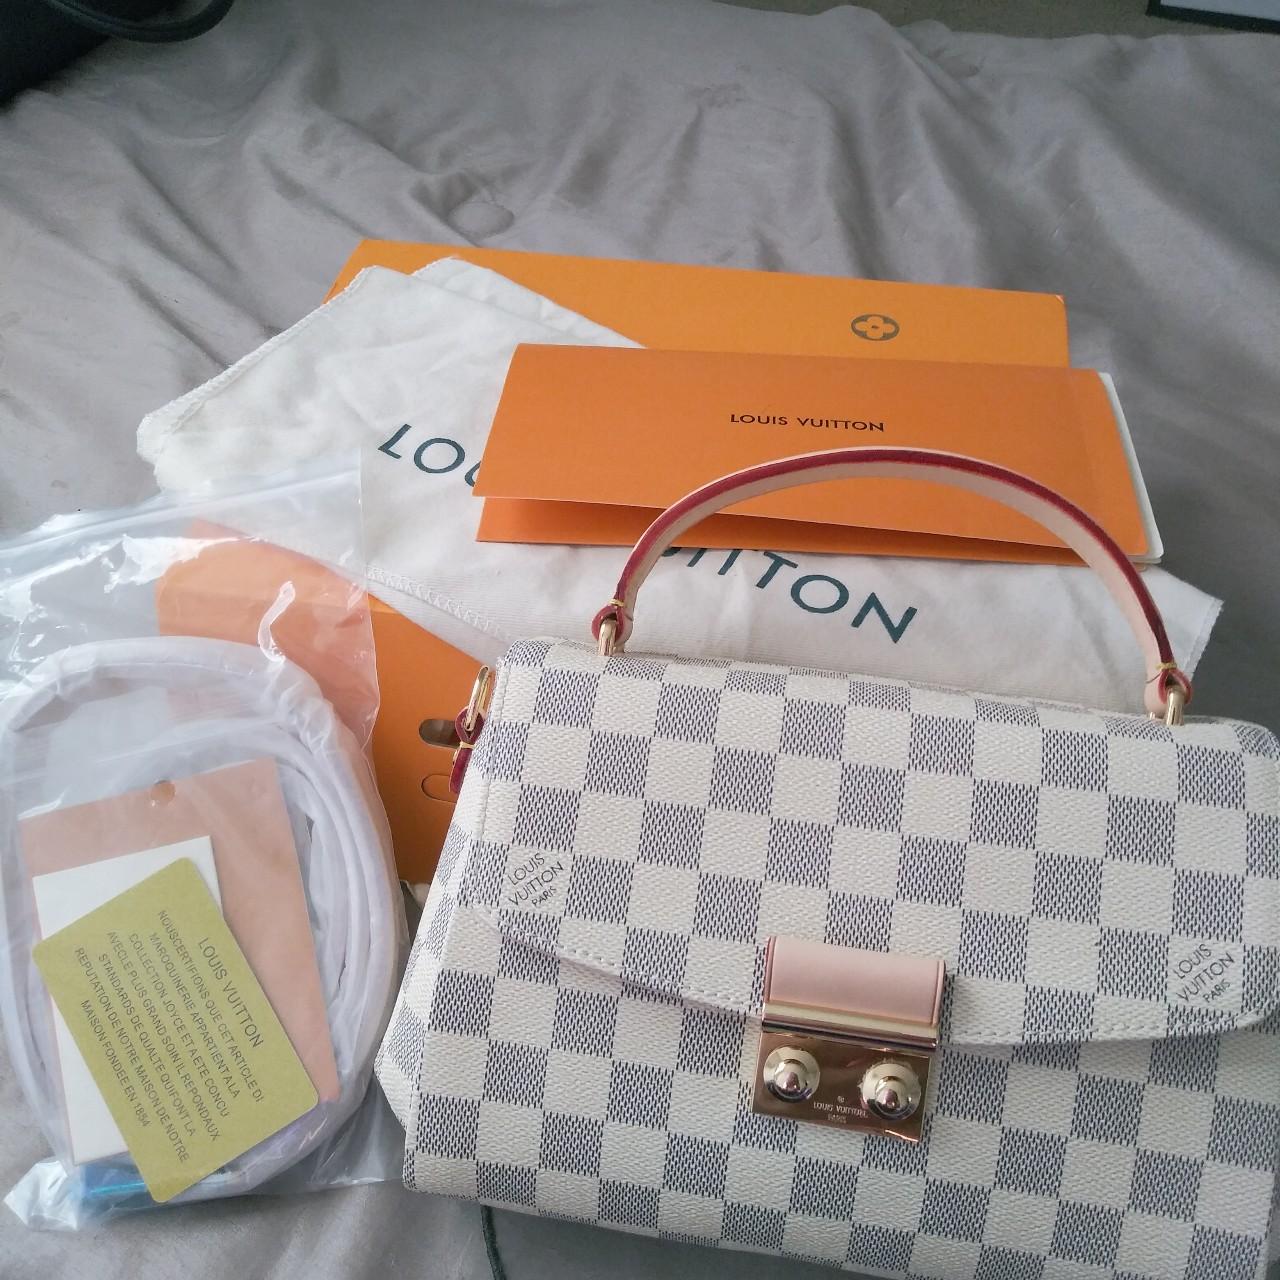 Authentic Louis Vuitton bag with authenticity card - Depop